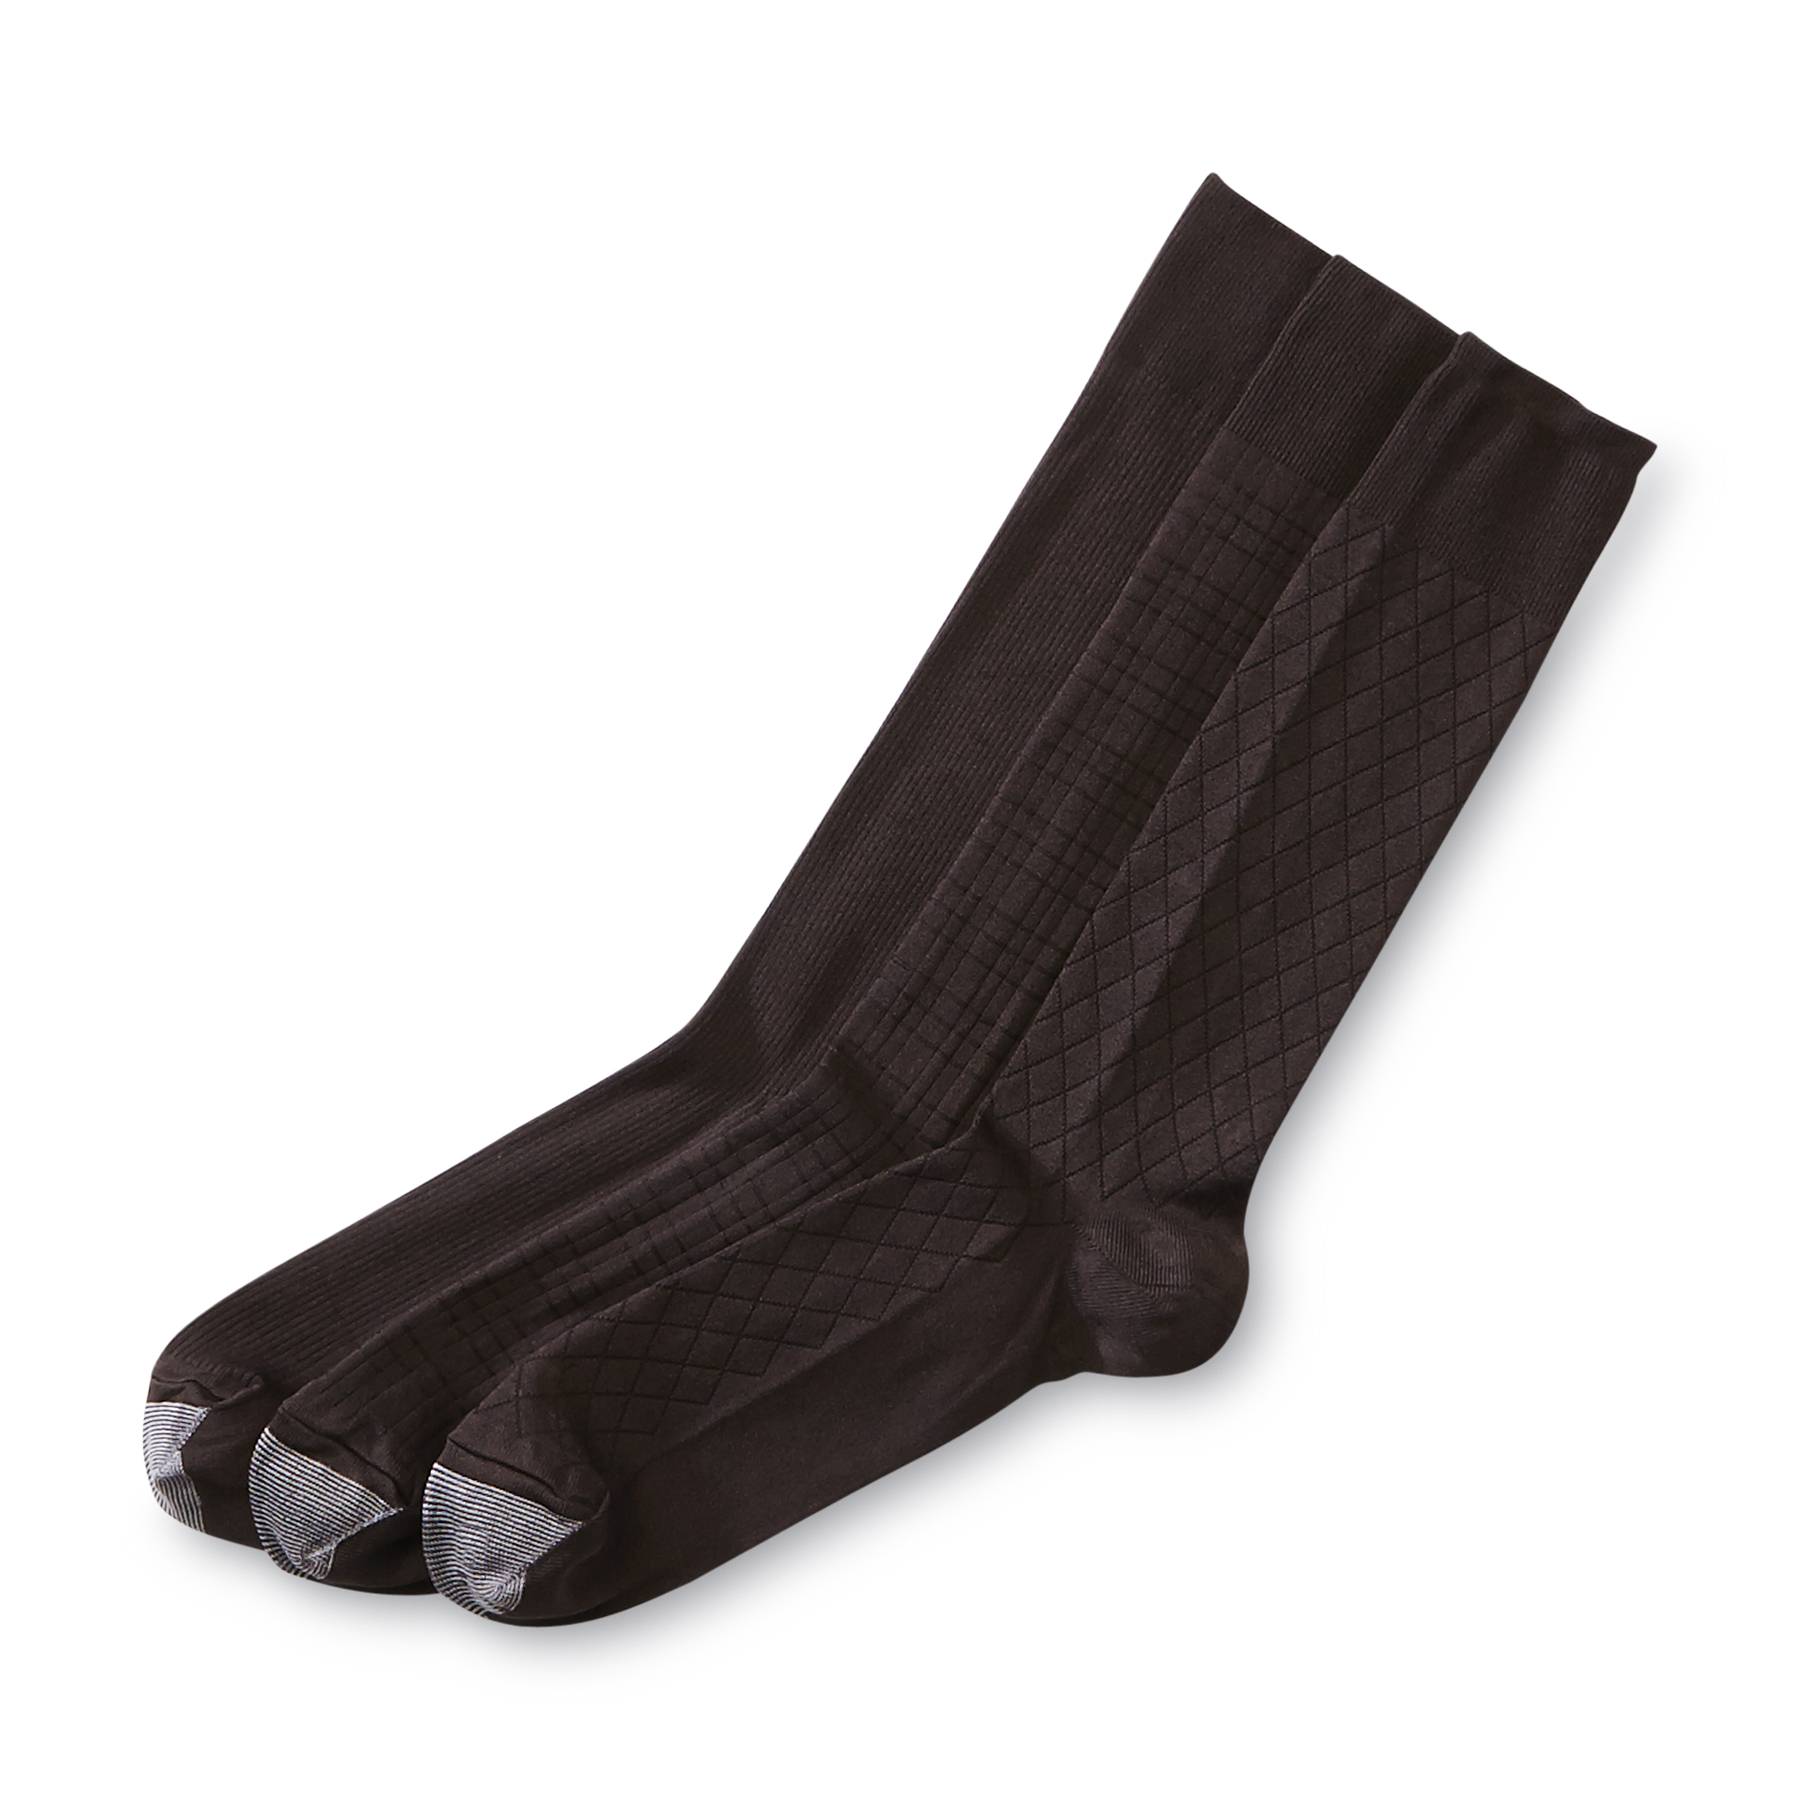 Silvertoe Aquafx® Nylon Texture Socks - 3 pack